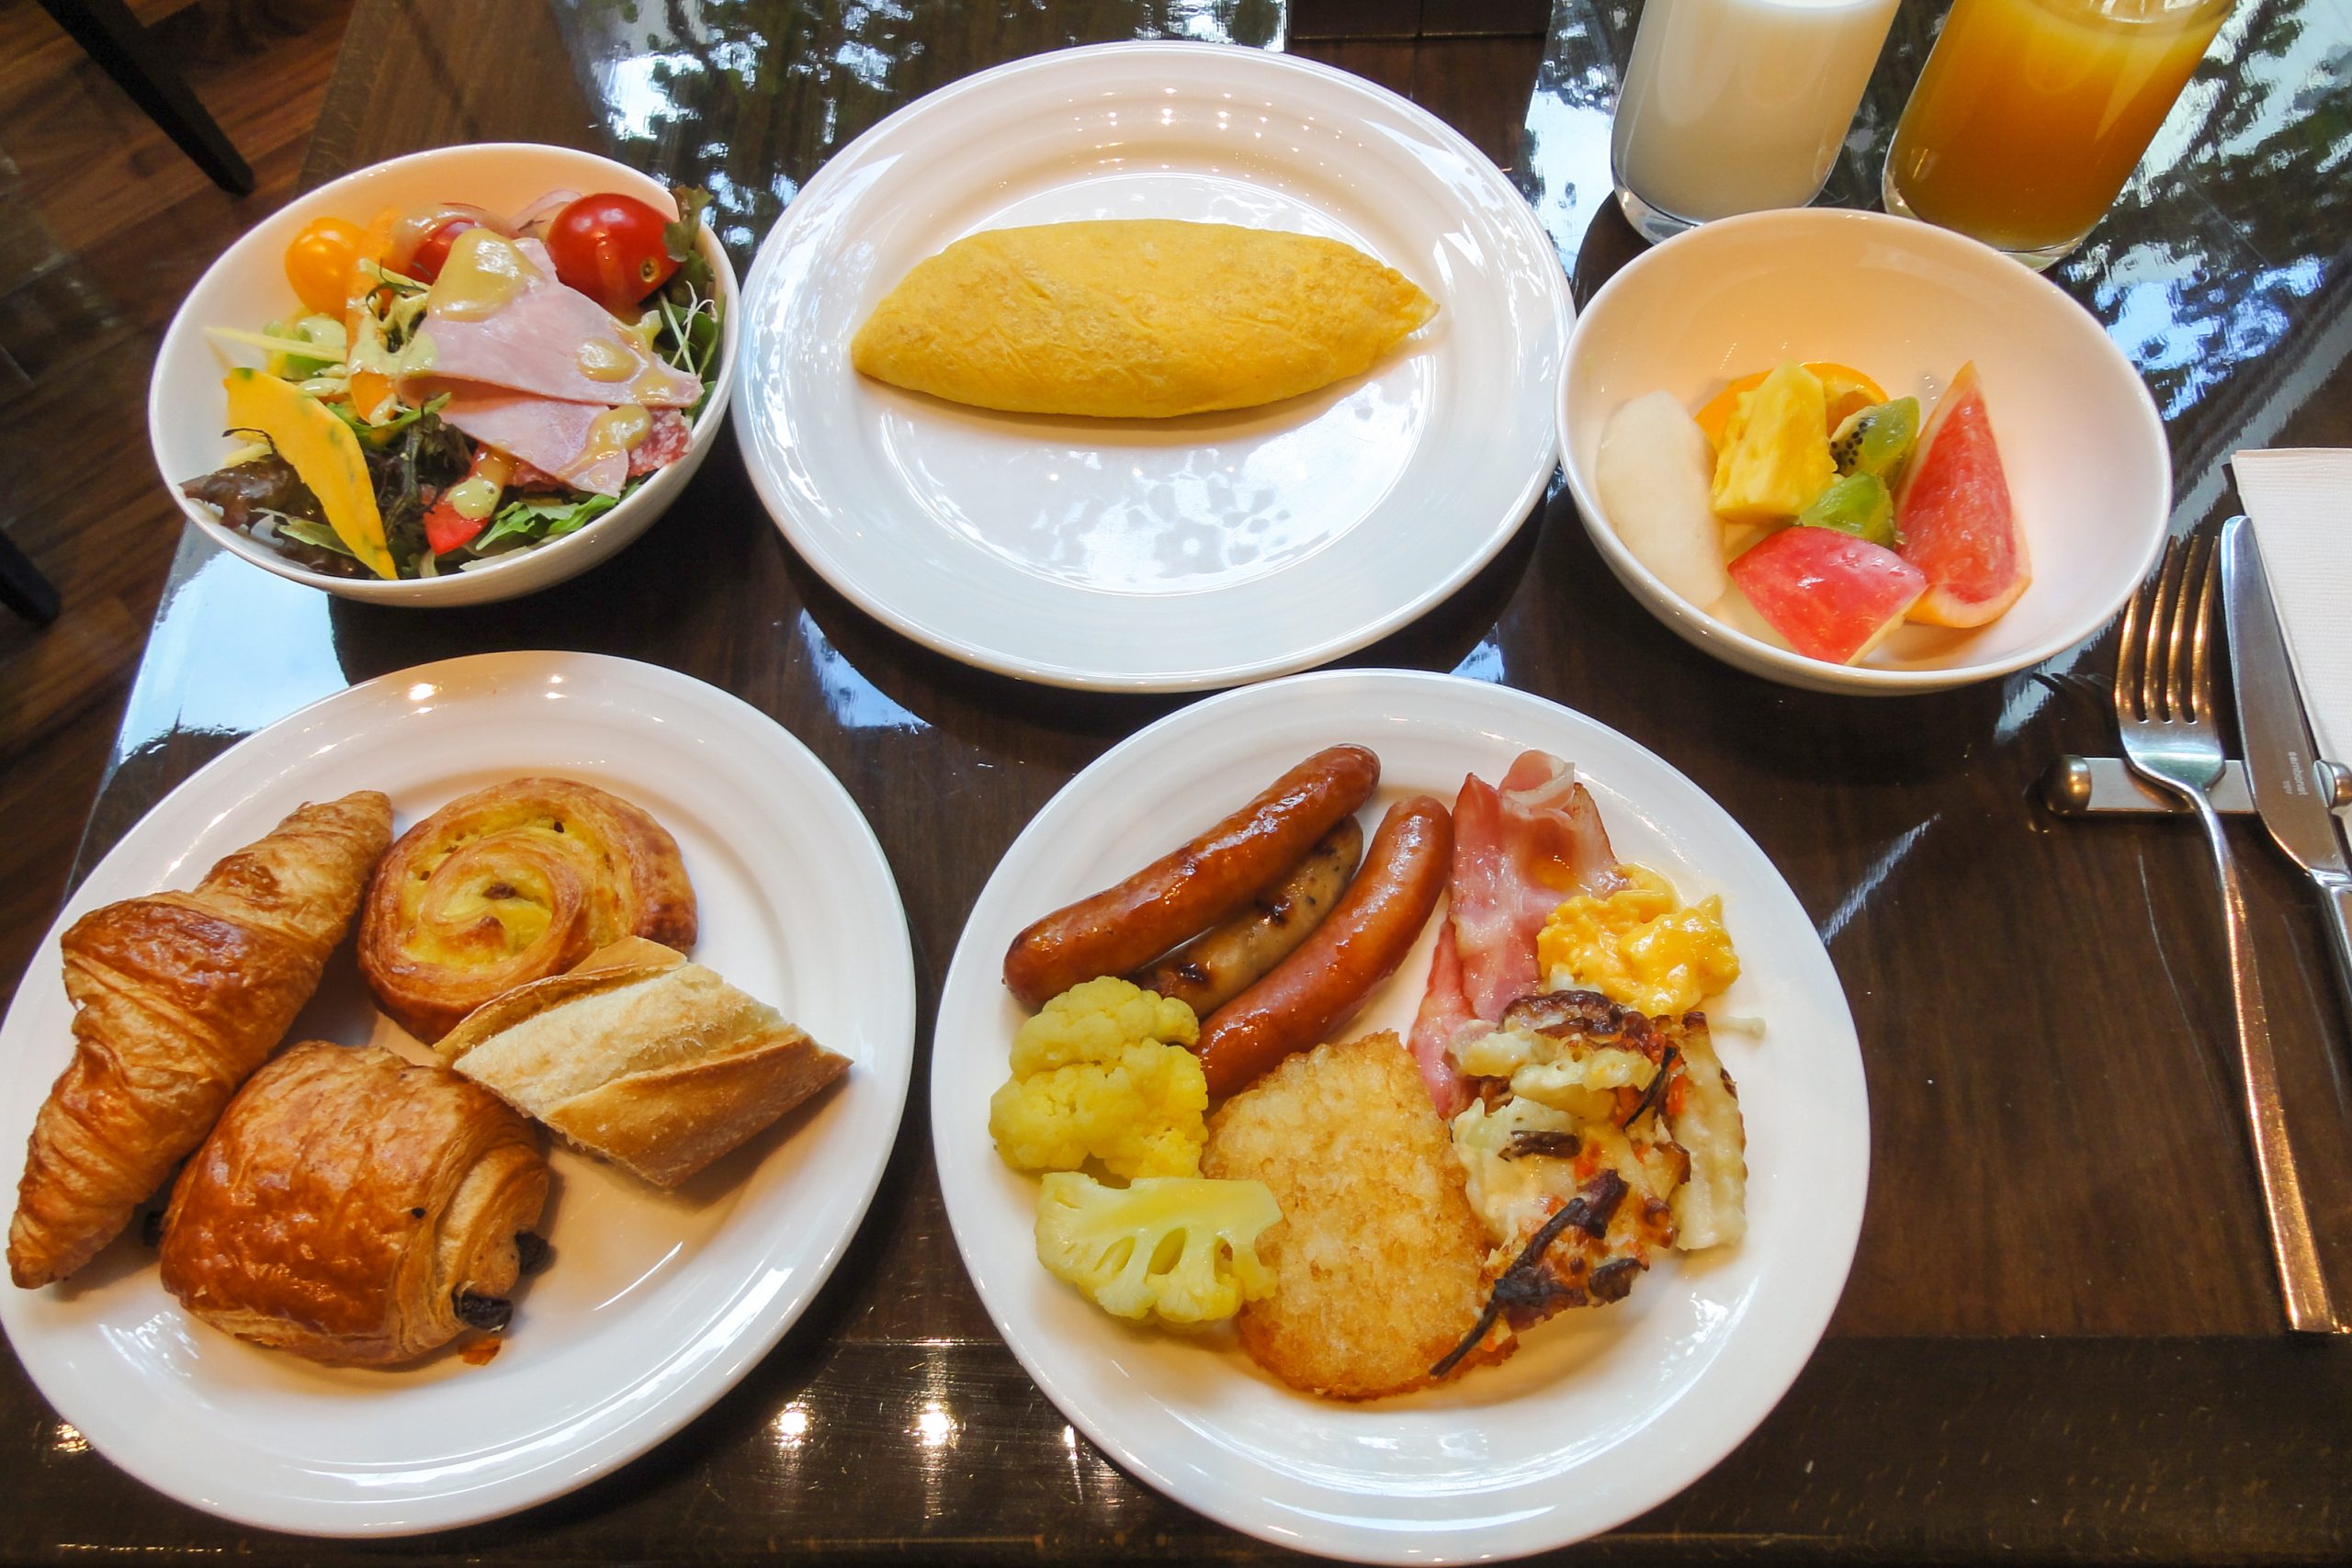 Plates of breakfast foods